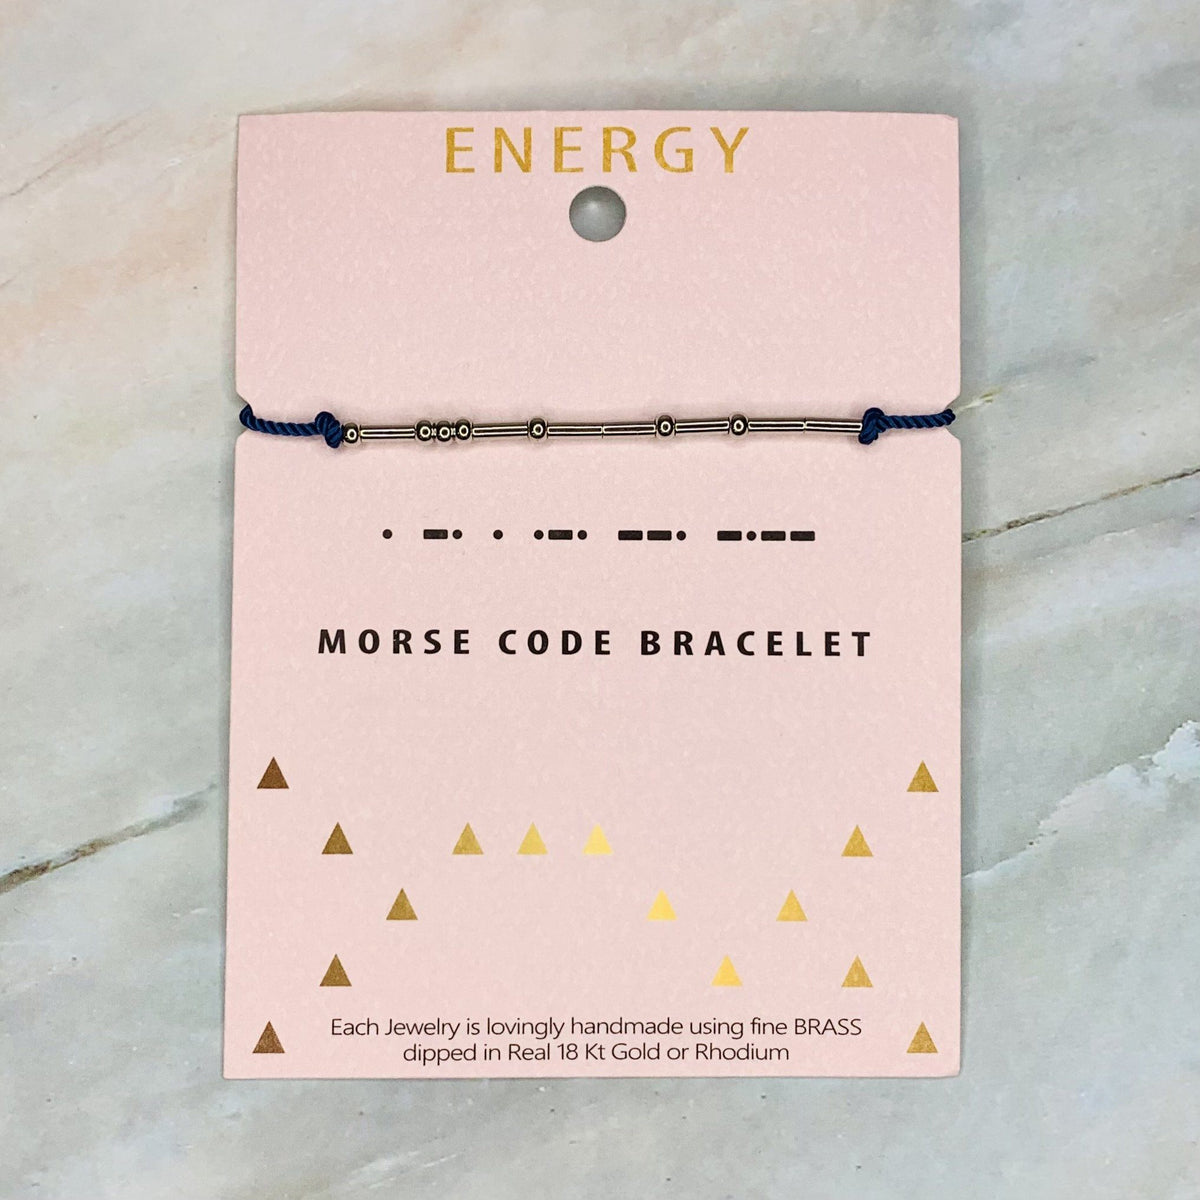 Morse Code Bracelet Jewelry Lauren-Spencer Energy 